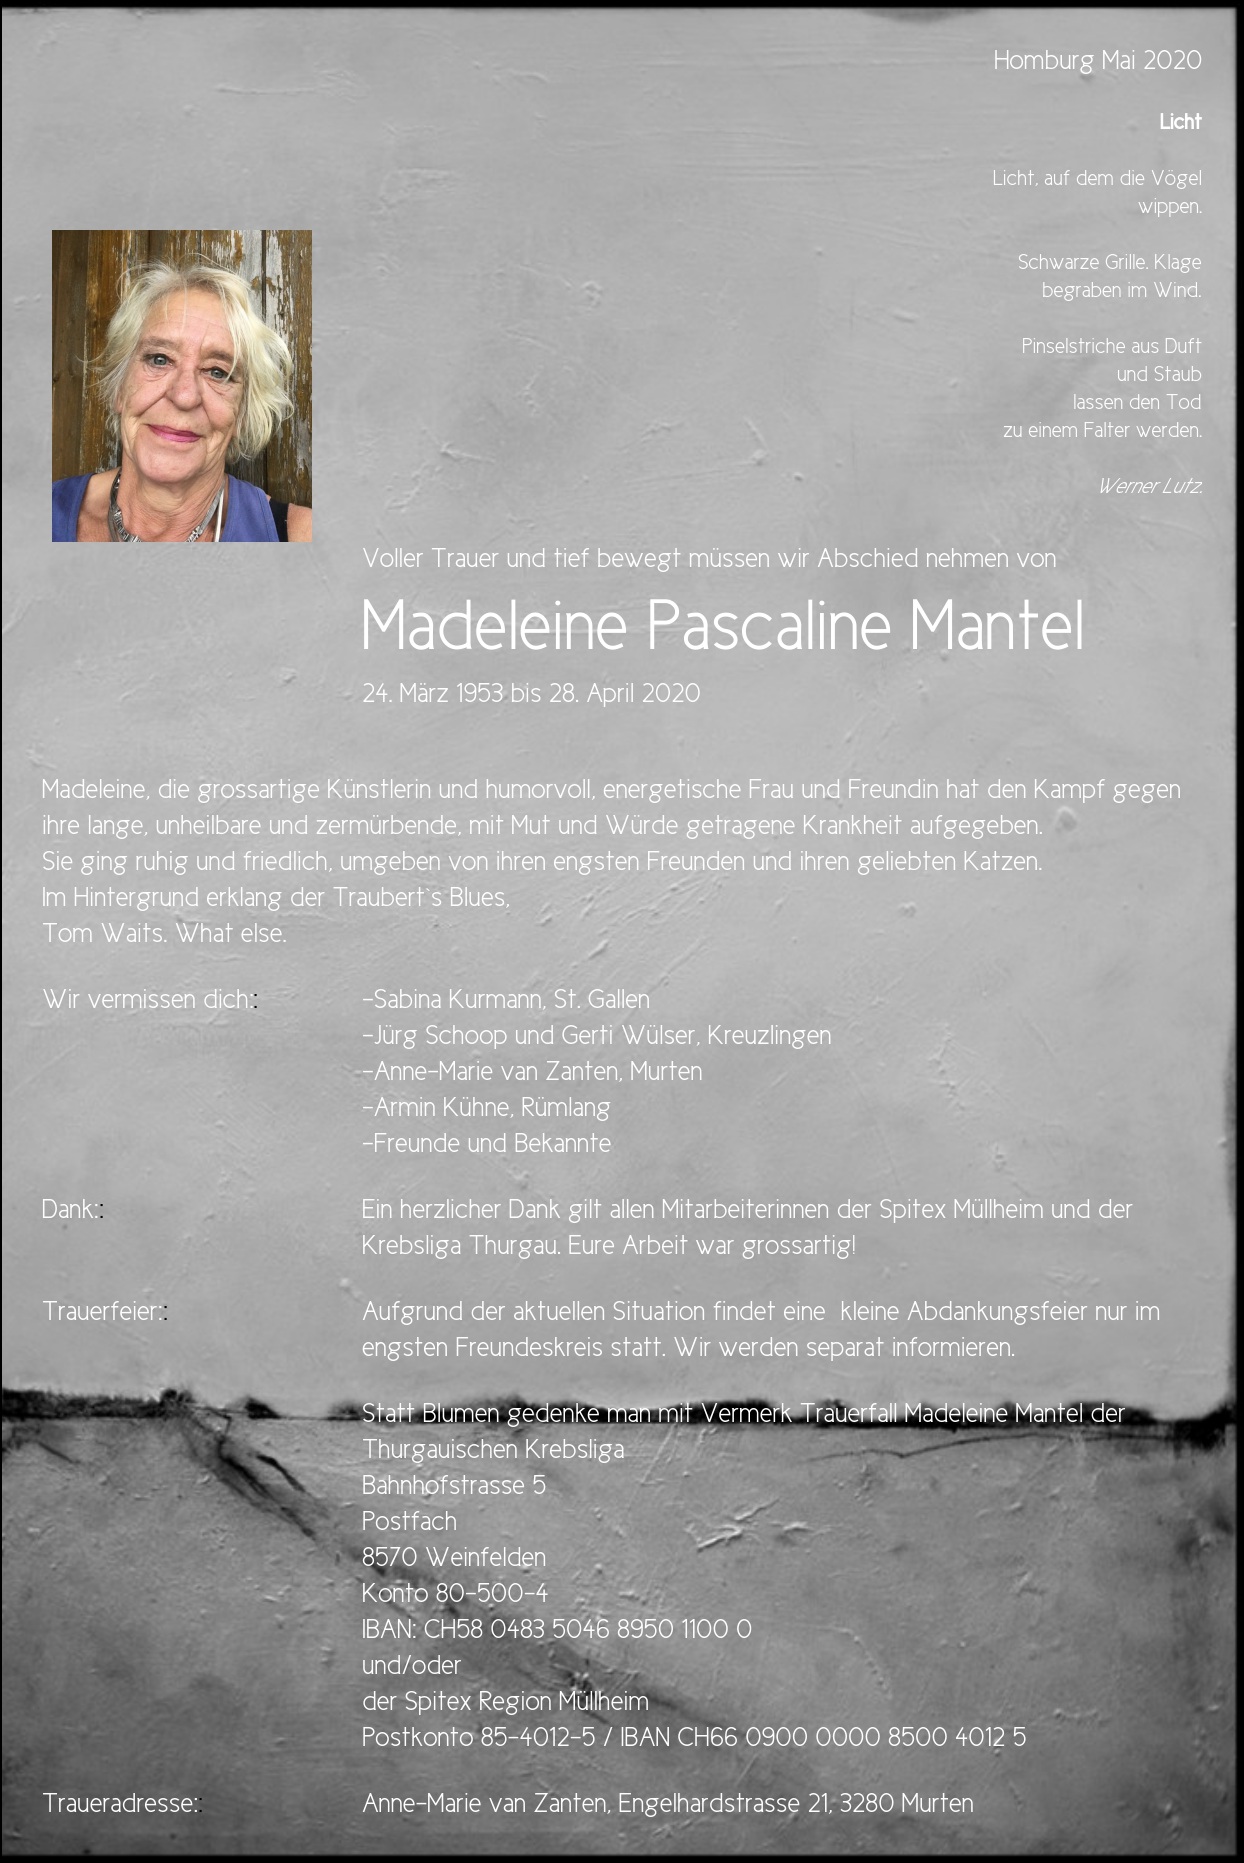 Madeleine Pascaline Mantel